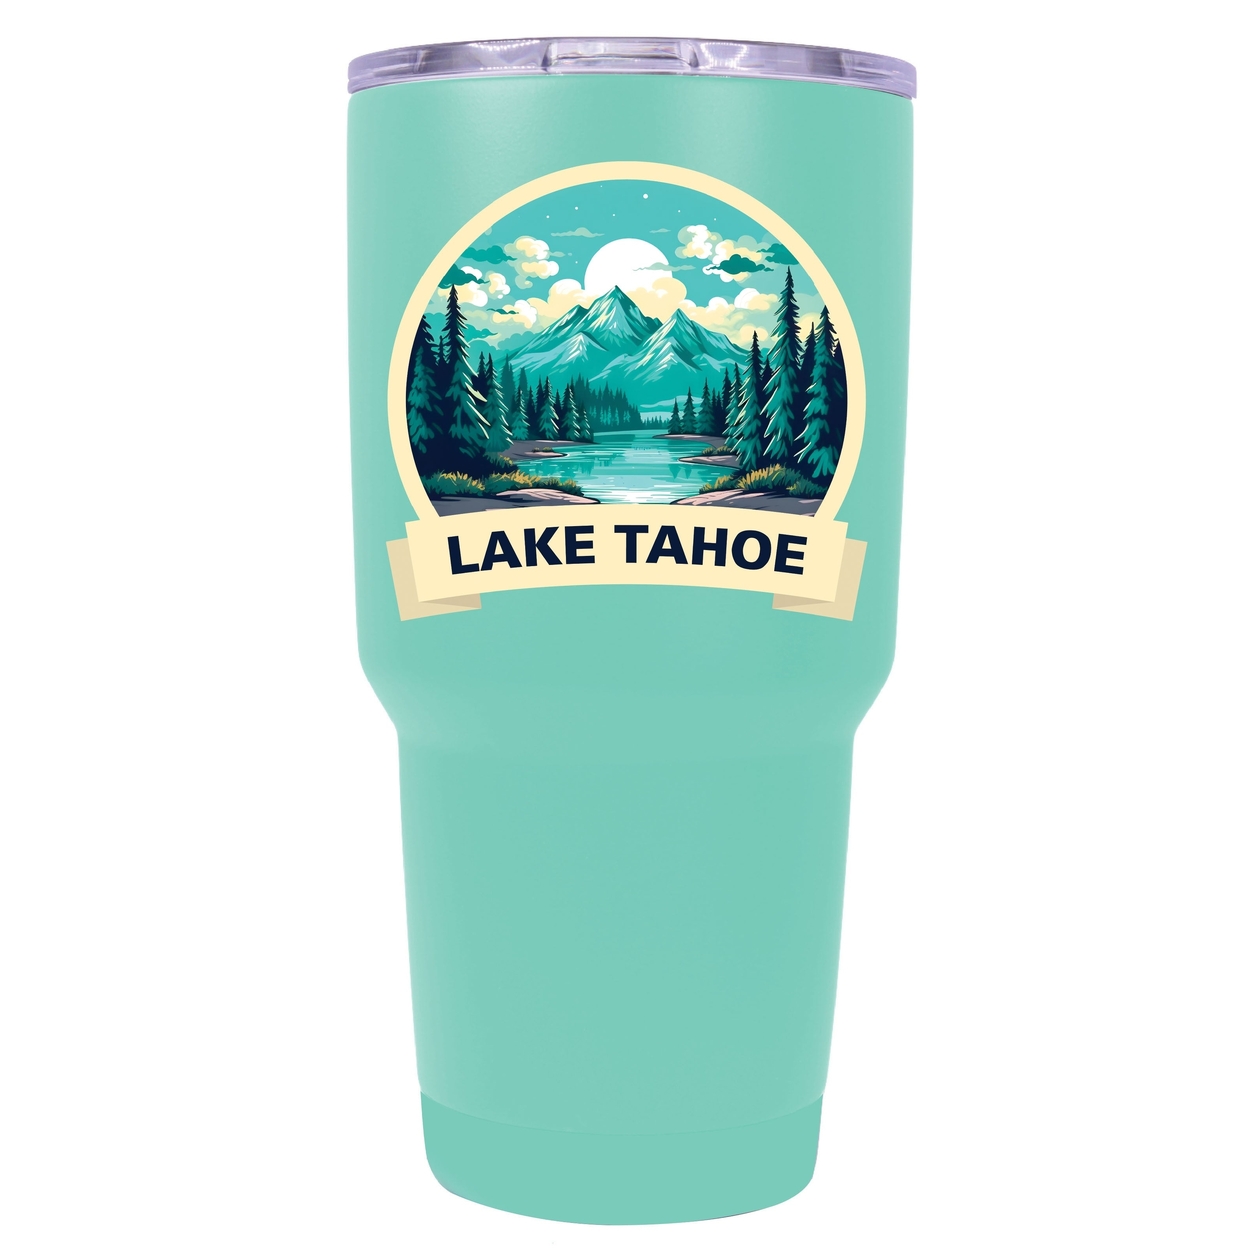 Lake Tahoe California Souvenir 24 Oz Insulated Stainless Steel Tumbler - White,,4-Pack